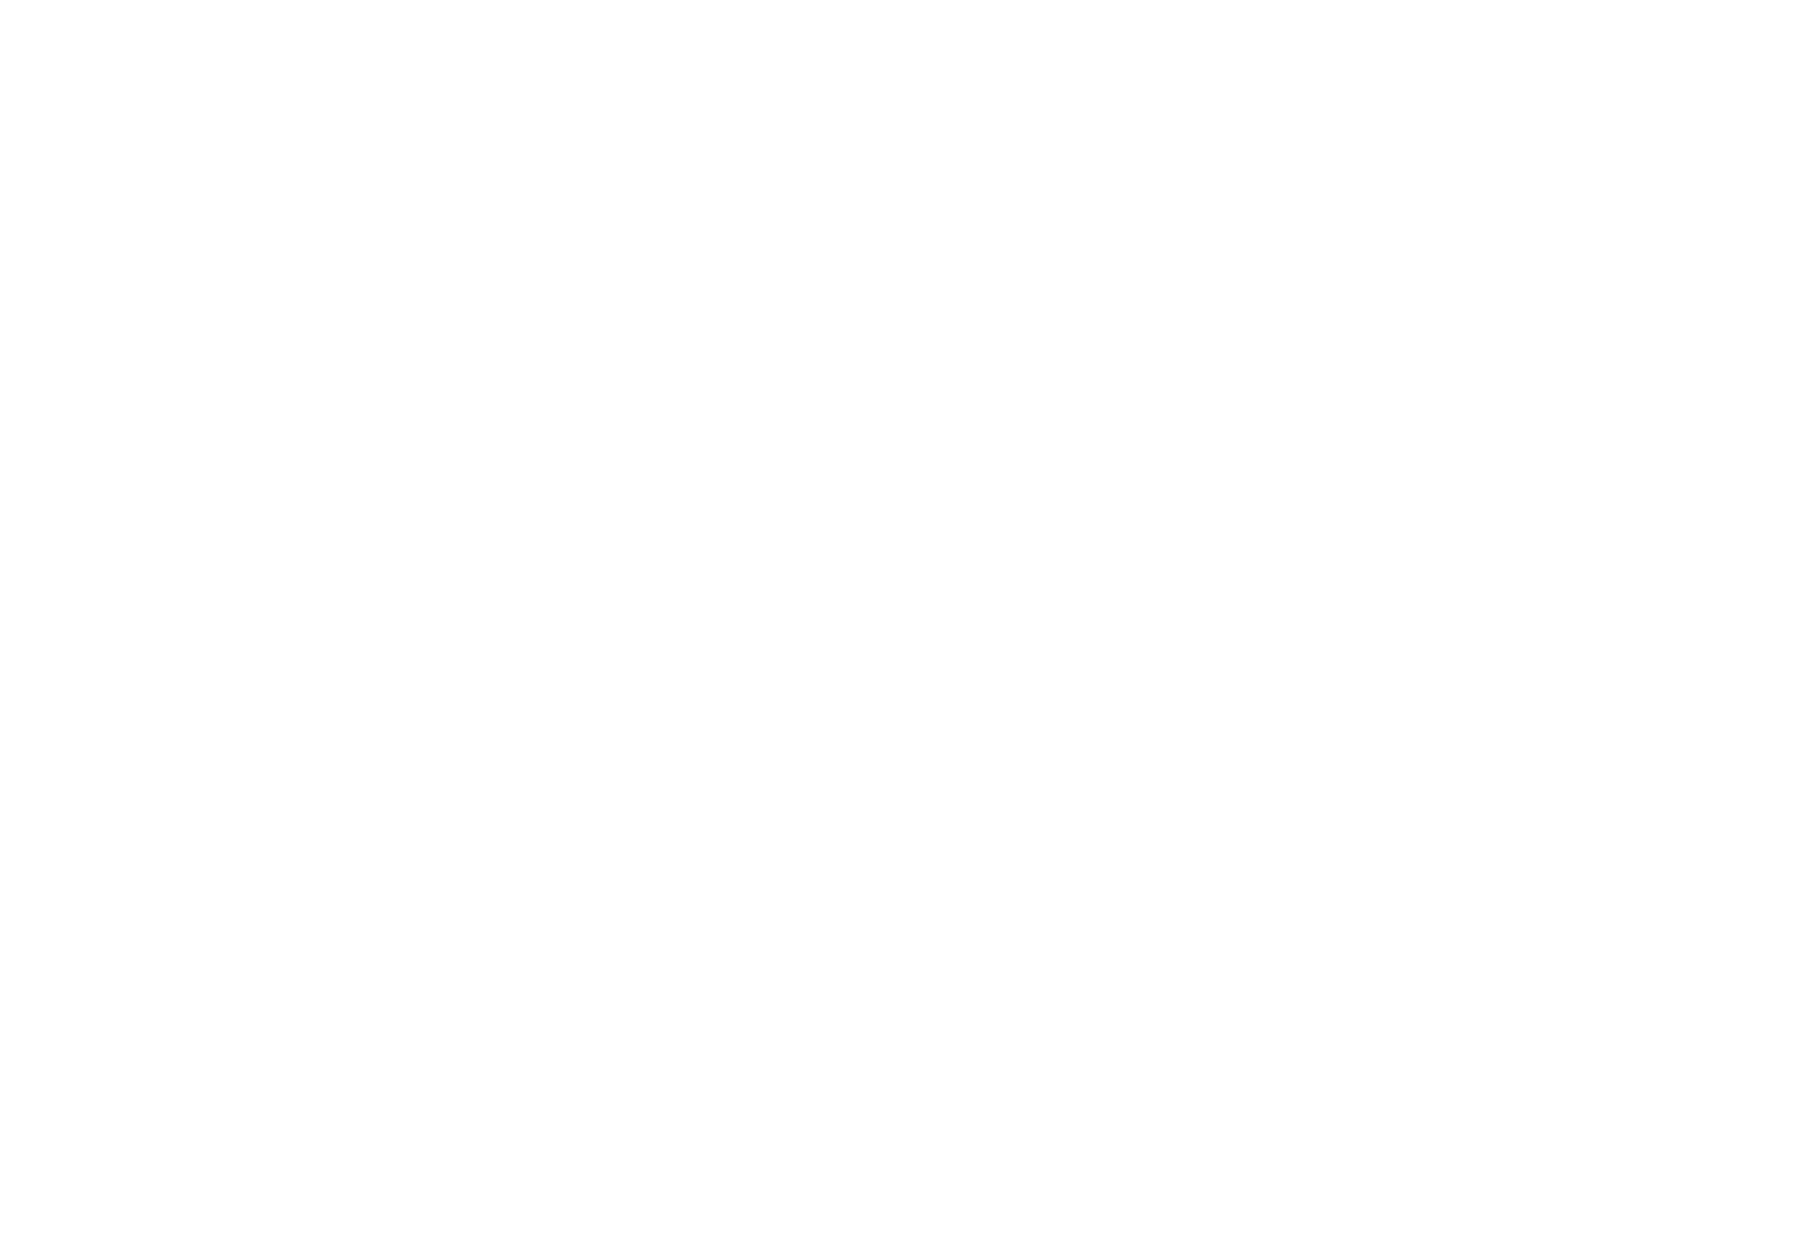 Brown hunt